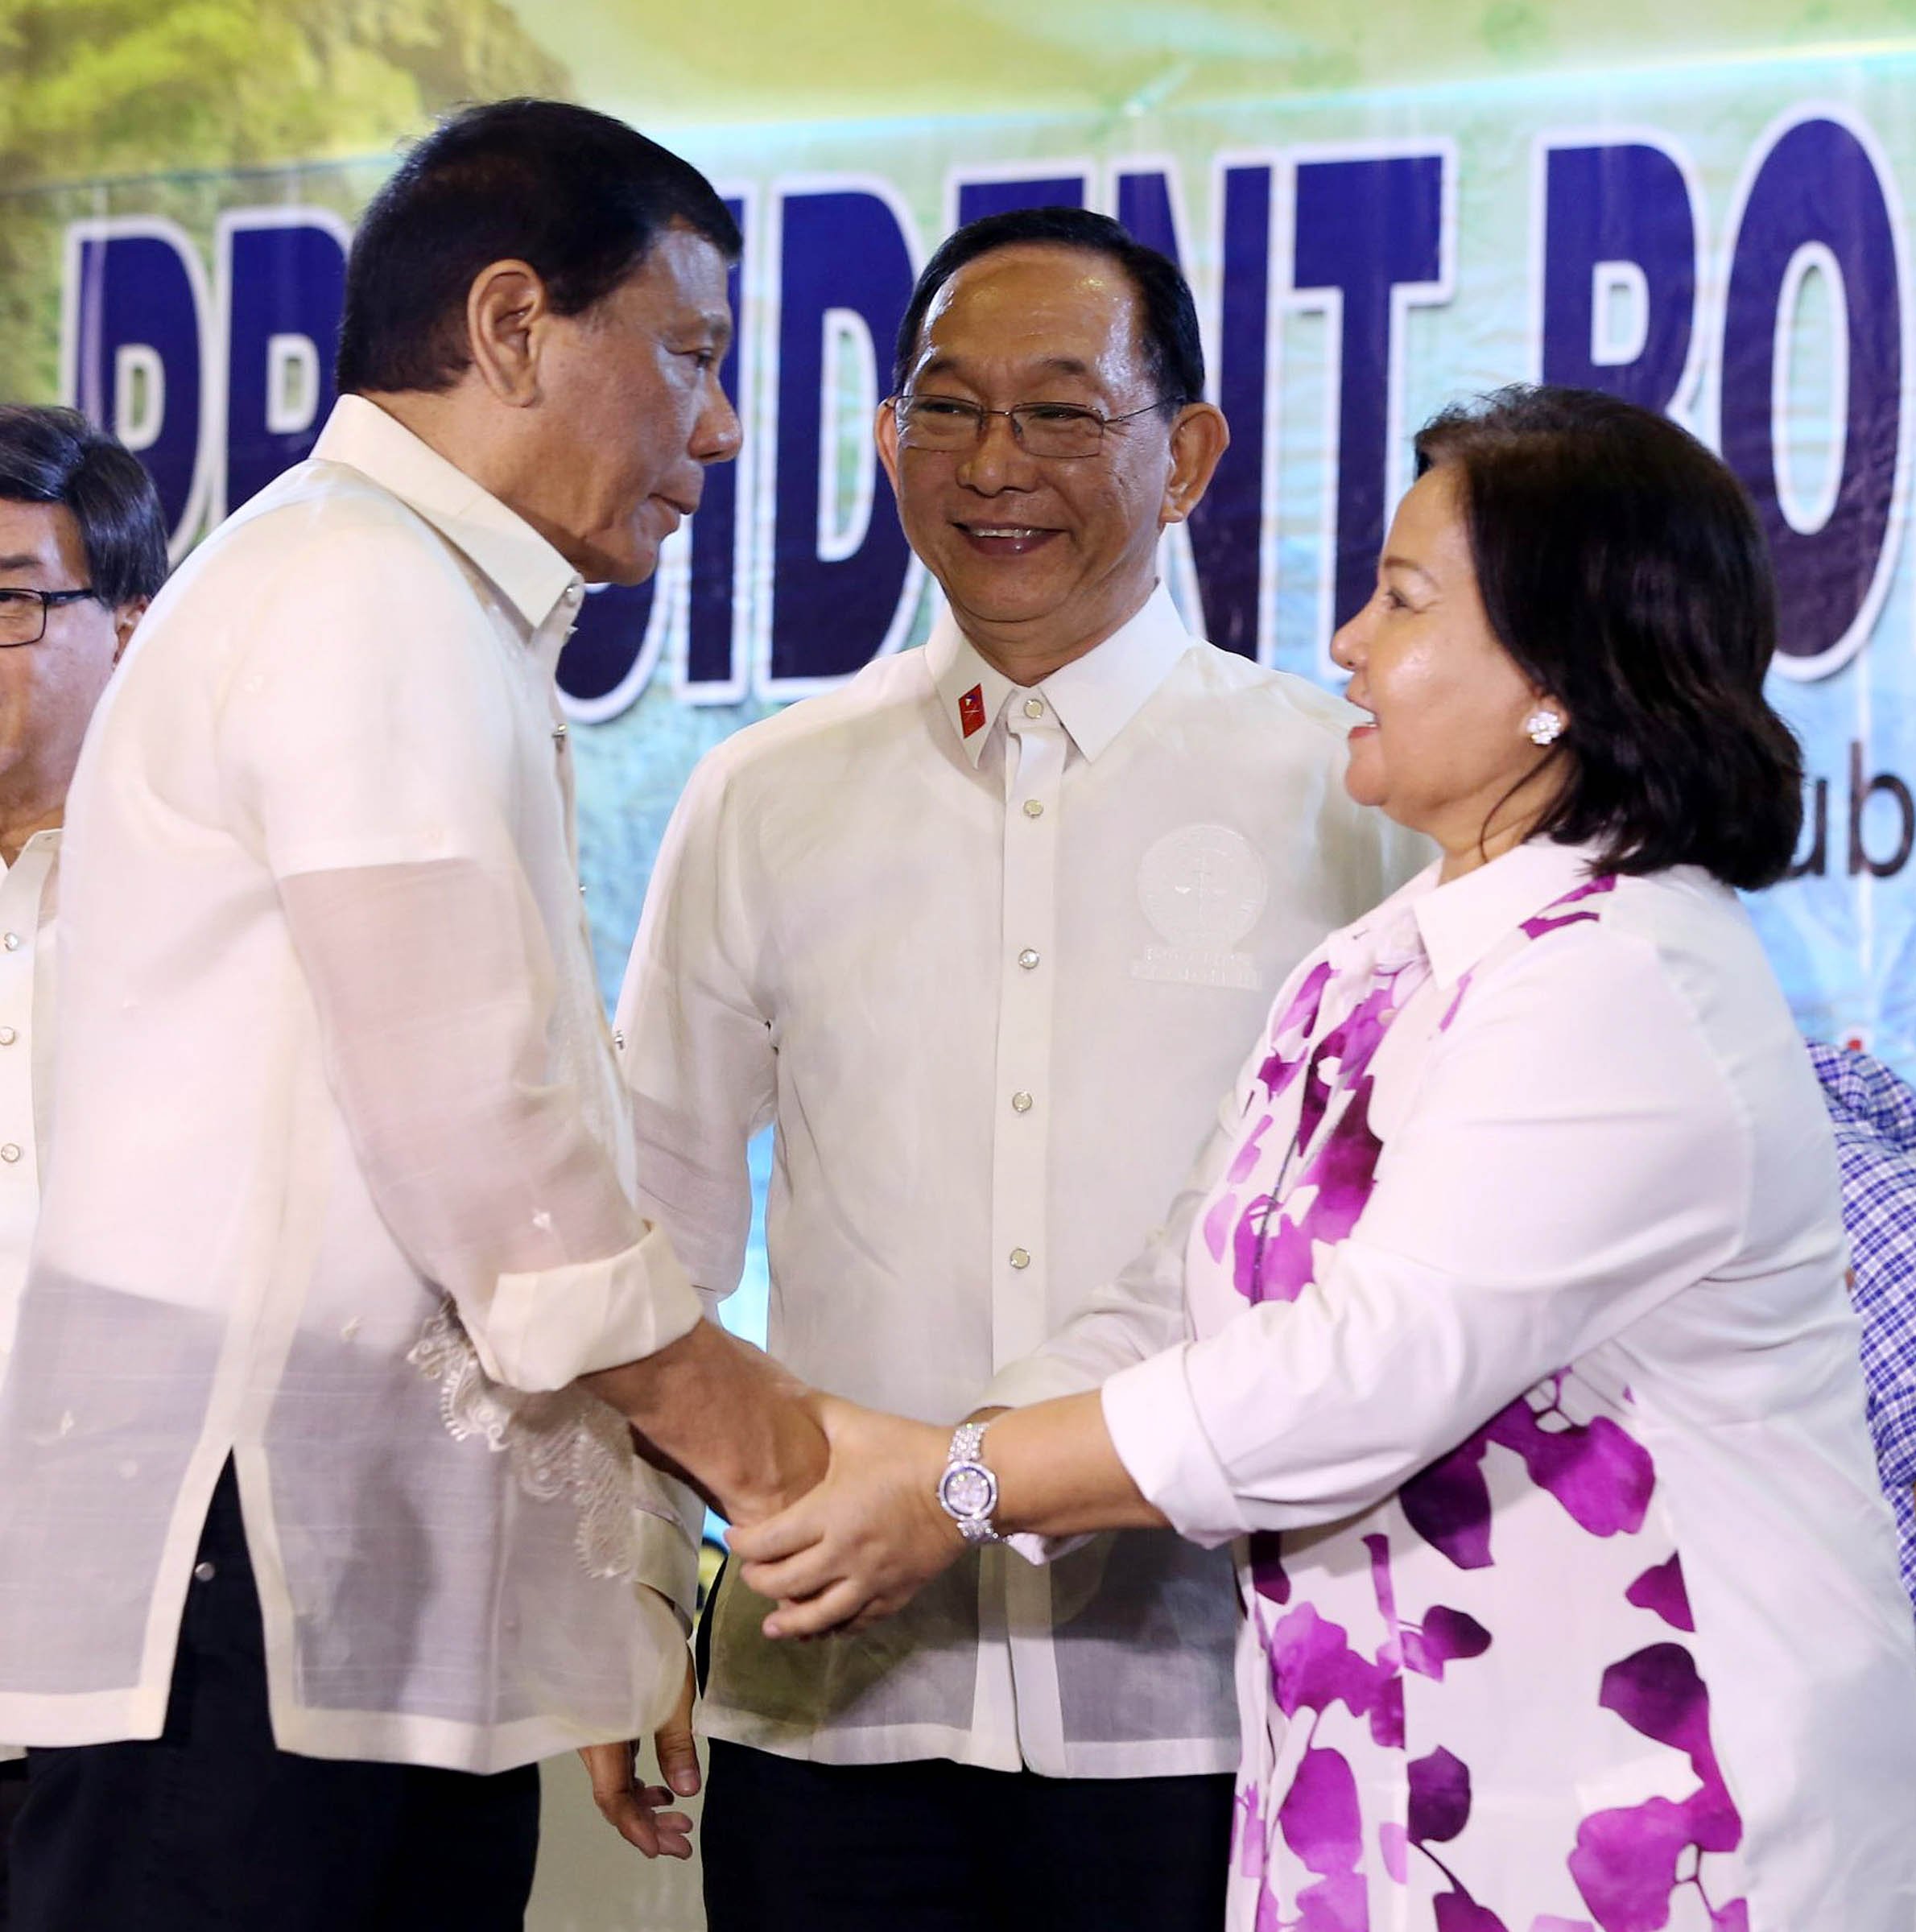 President Rodrigo Roa Duterte shakes hands with Pampanga Governor Lilia Pineda